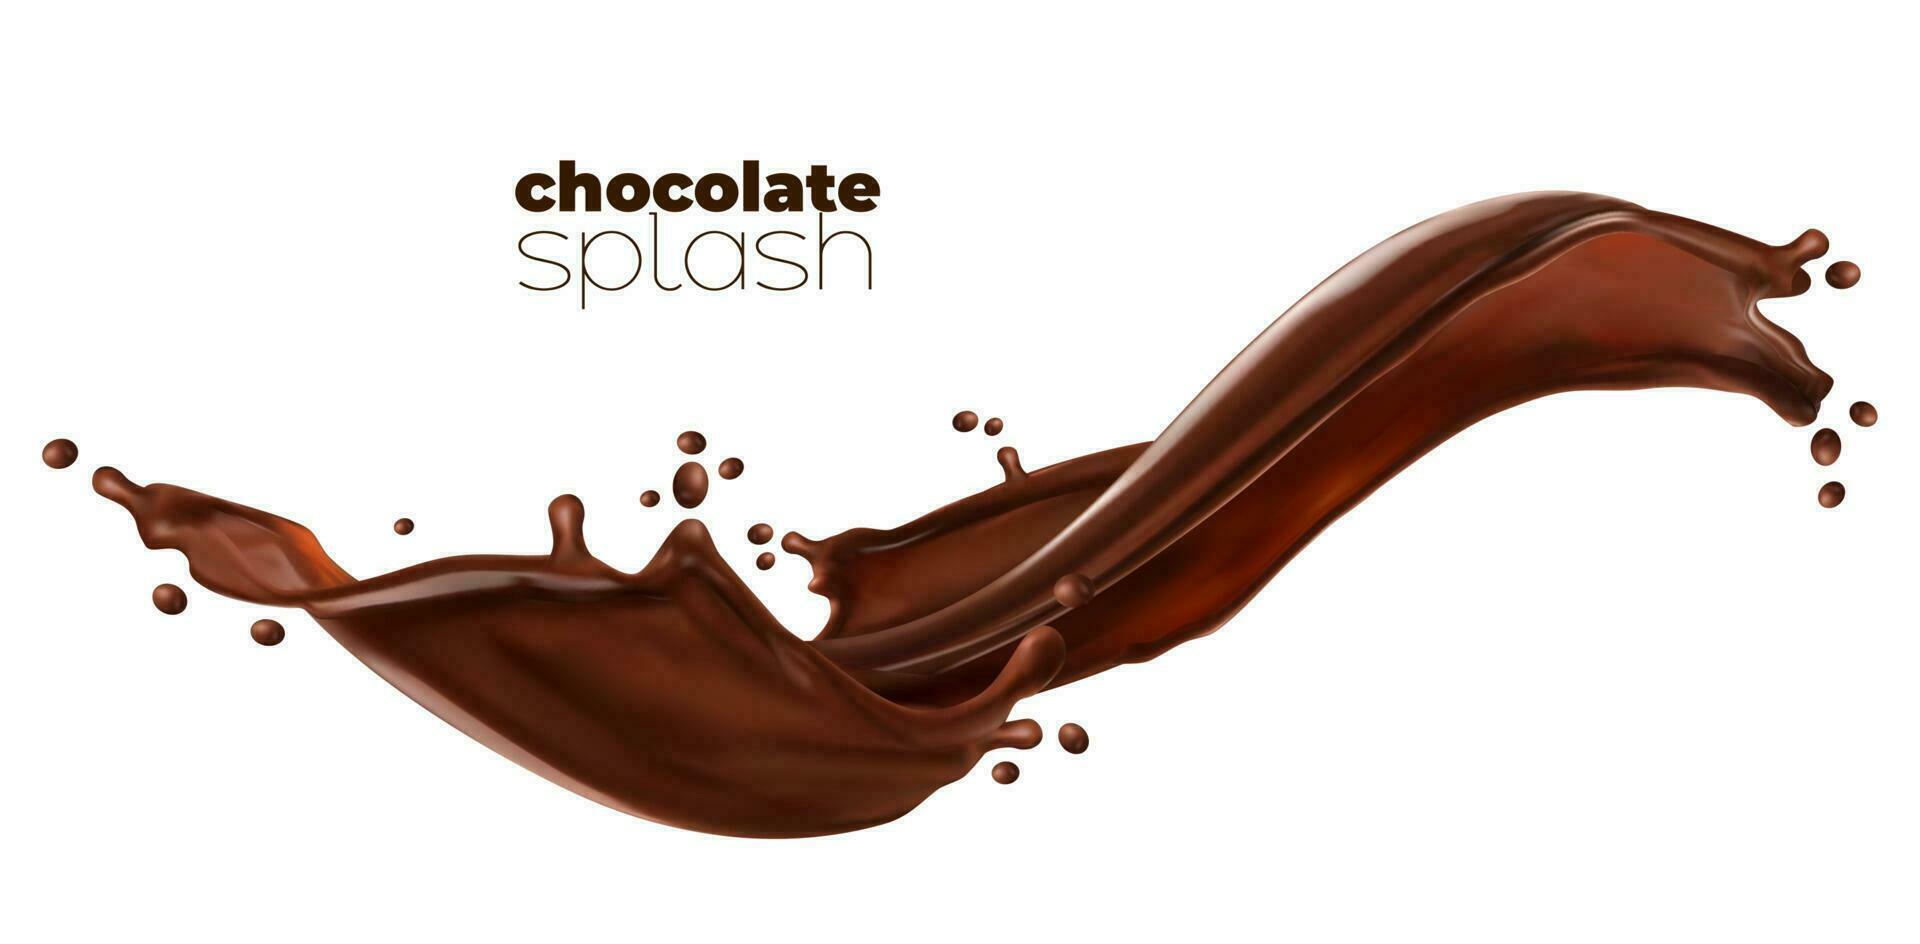 Chocolate or cocoa milk wave with flow splash vector